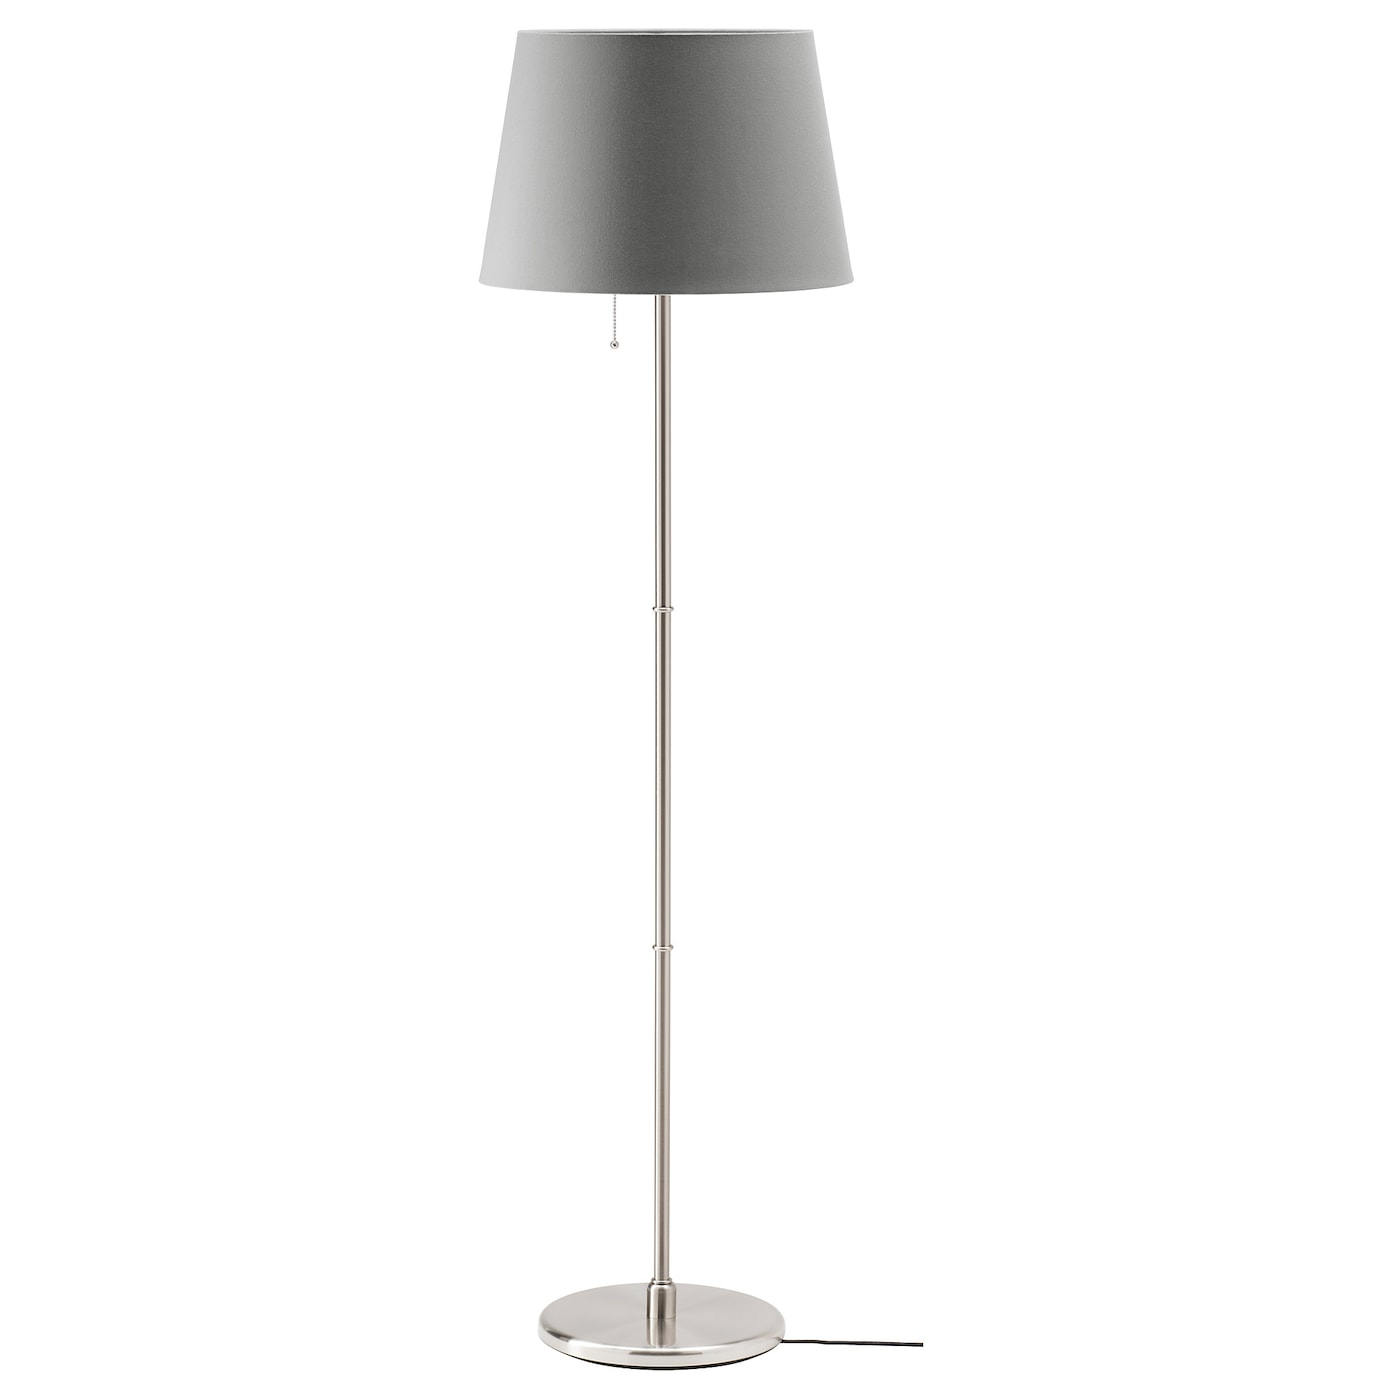 Jra Kryssmast Floor Lamp Gray Nickel Plated throughout proportions 1400 X 1400